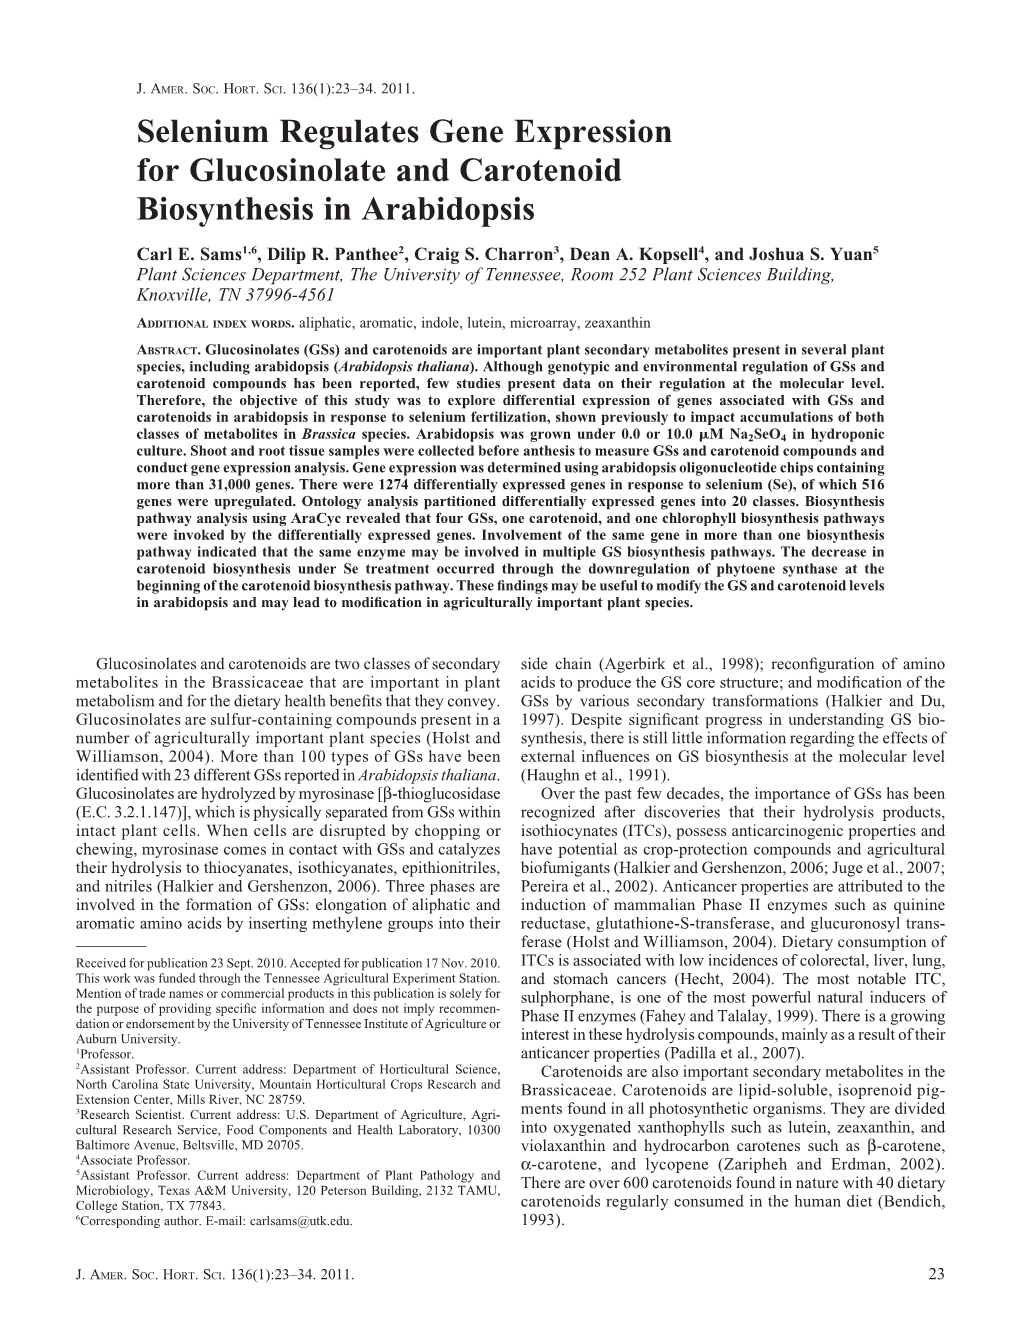 Selenium Regulates Gene Expression for Glucosinolate and Carotenoid Biosynthesis in Arabidopsis